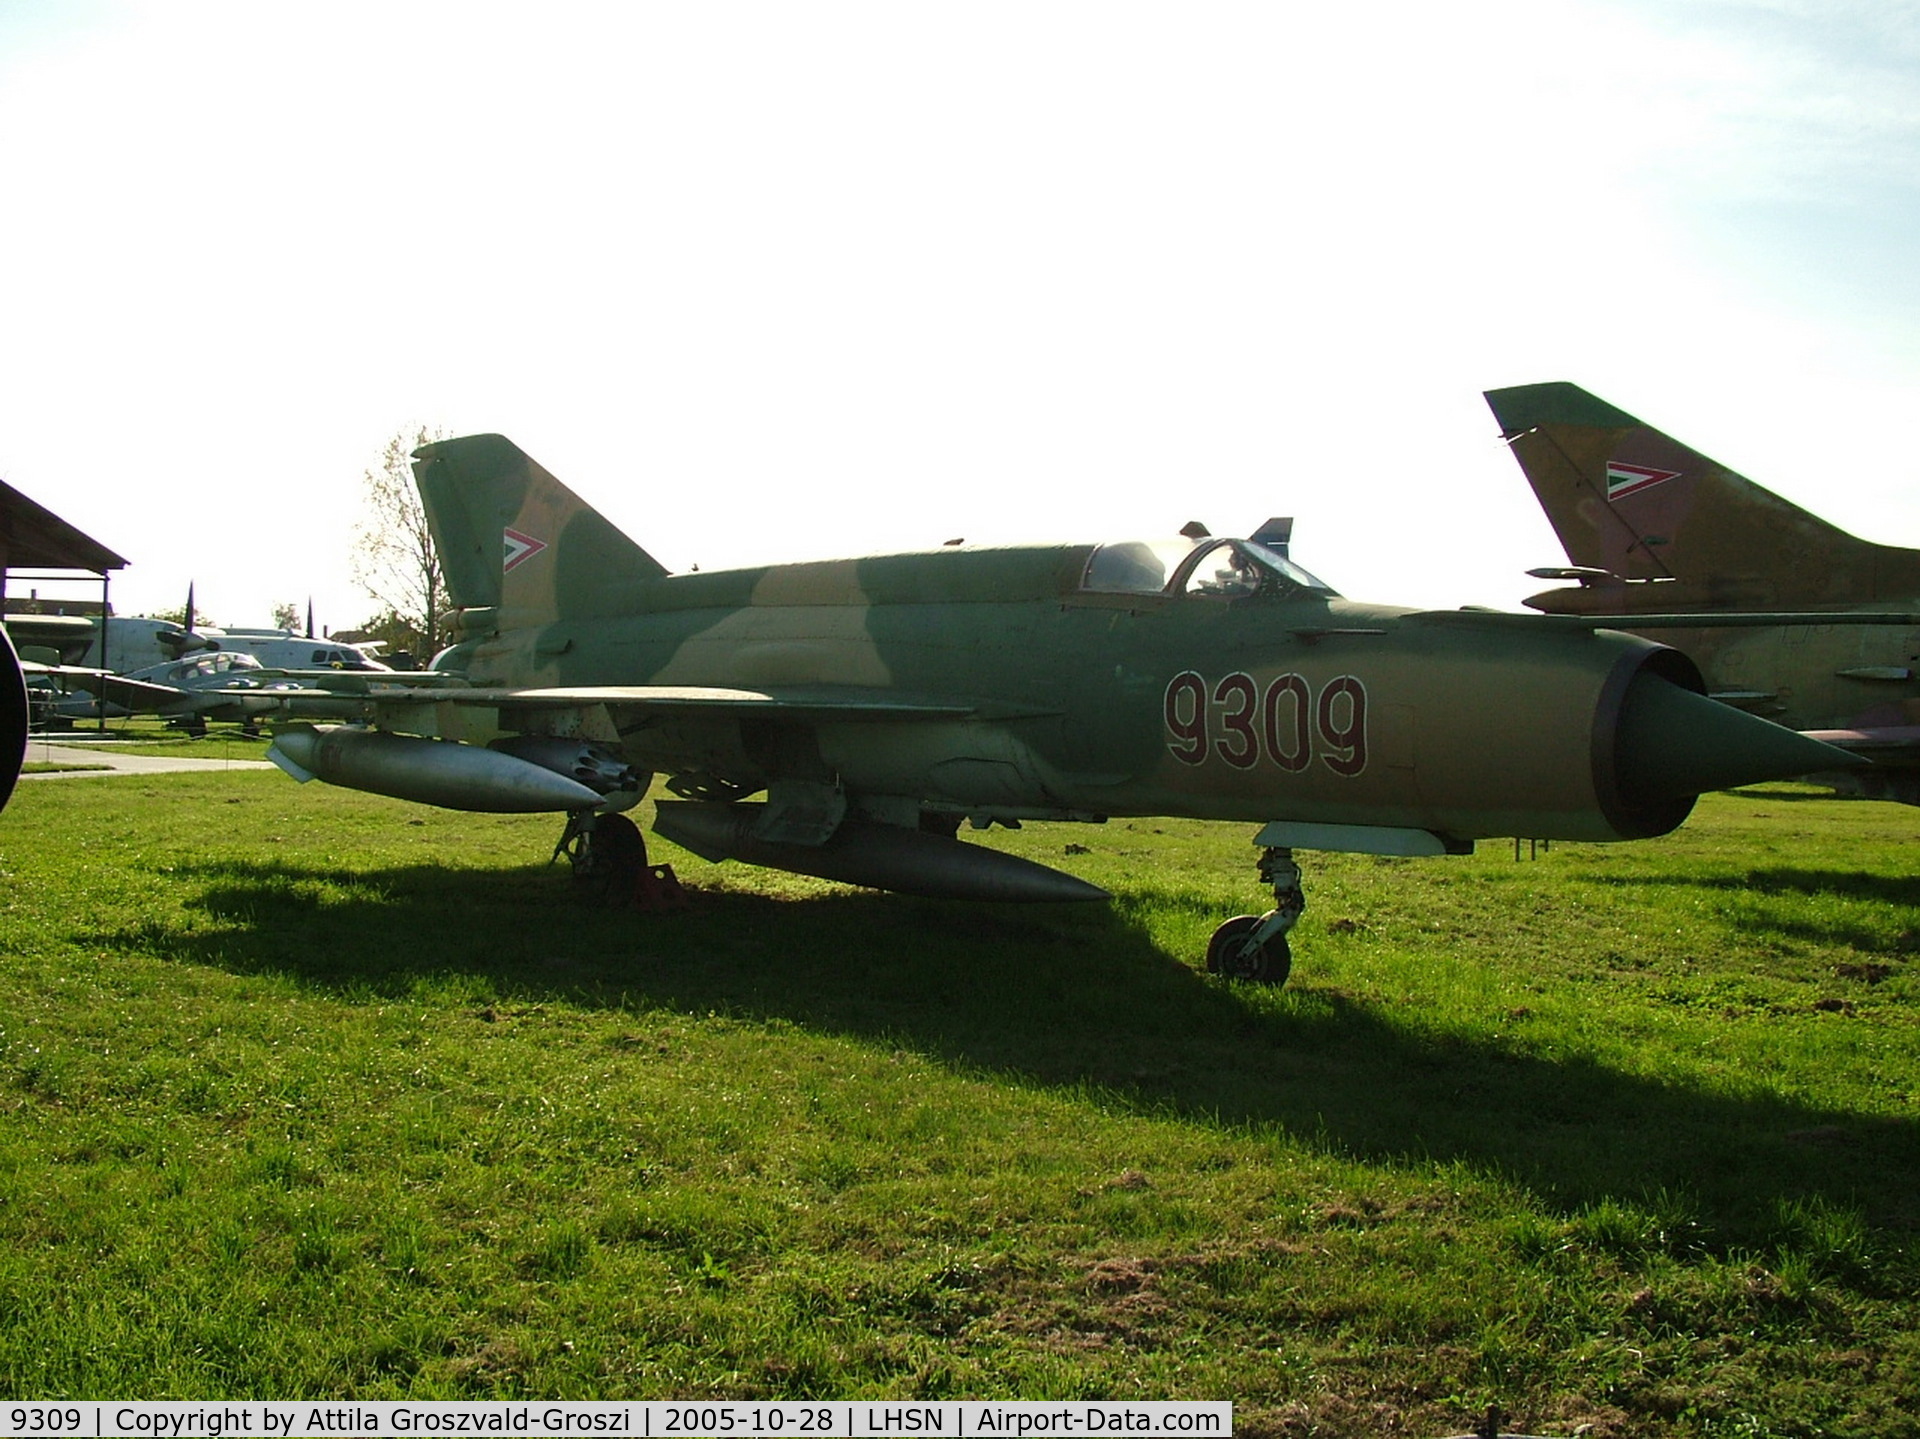 9309, 1974 Mikoyan-Gurevich MiG-21MF C/N 969309, Szolnok airplane museum, Hungary